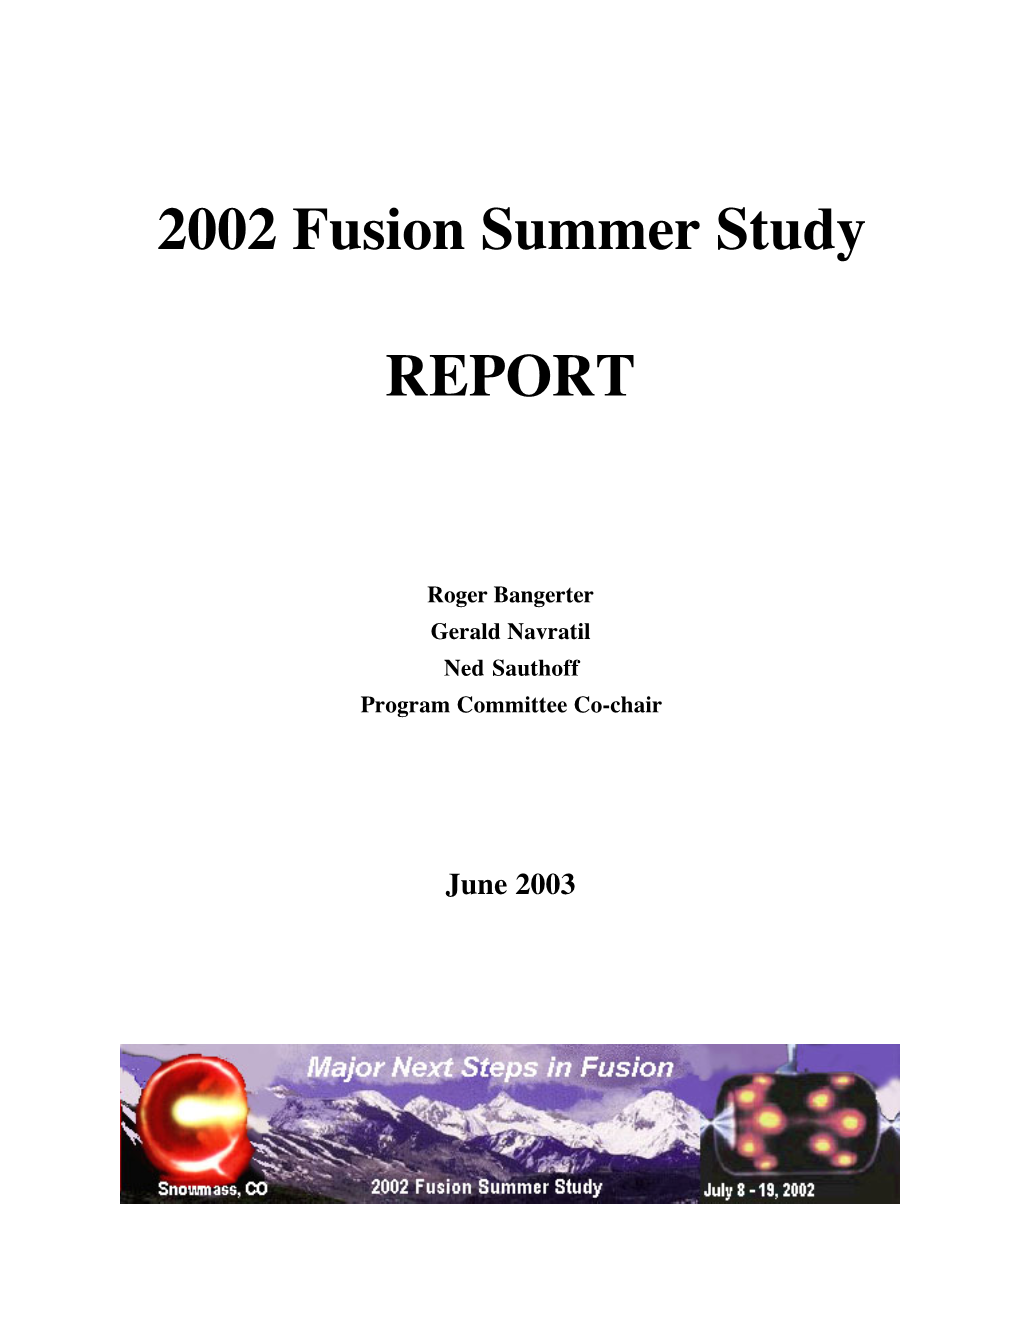 2002 Fusion Summer Study Report Ii